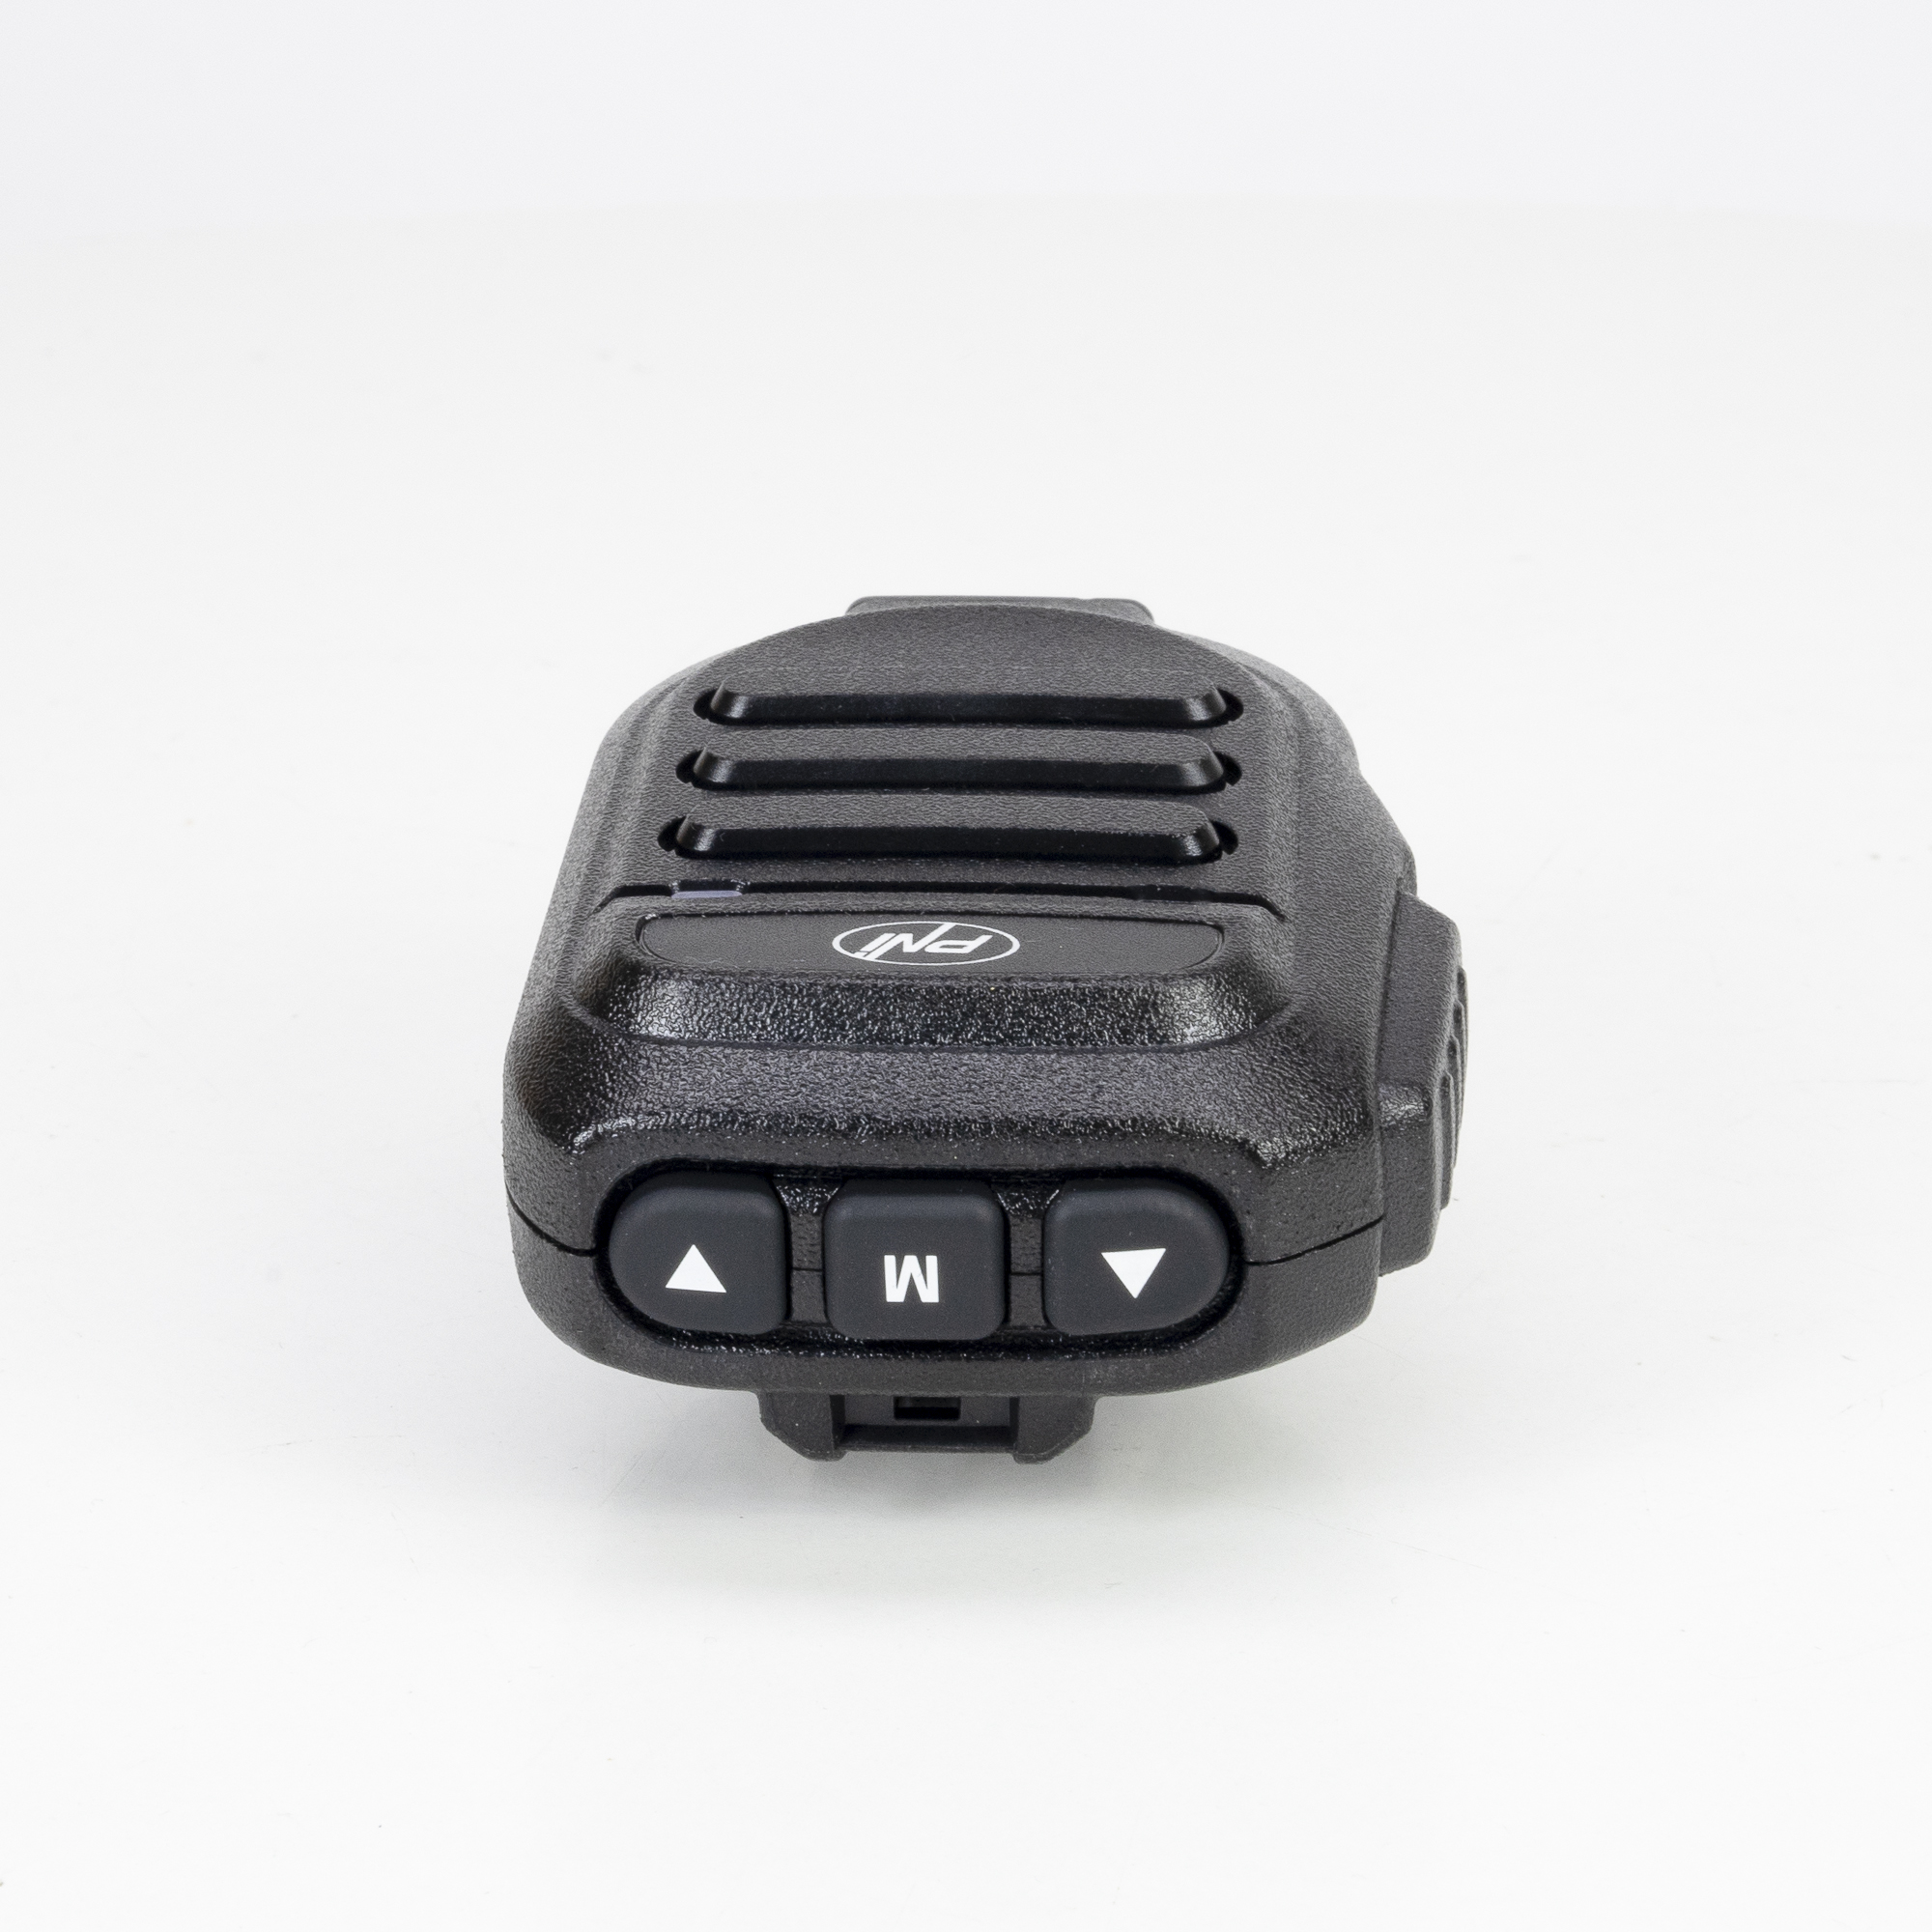 PNI-MIKE80 Drahtloses Mikrofon und Dongle mit Bluetooth - Bild 4